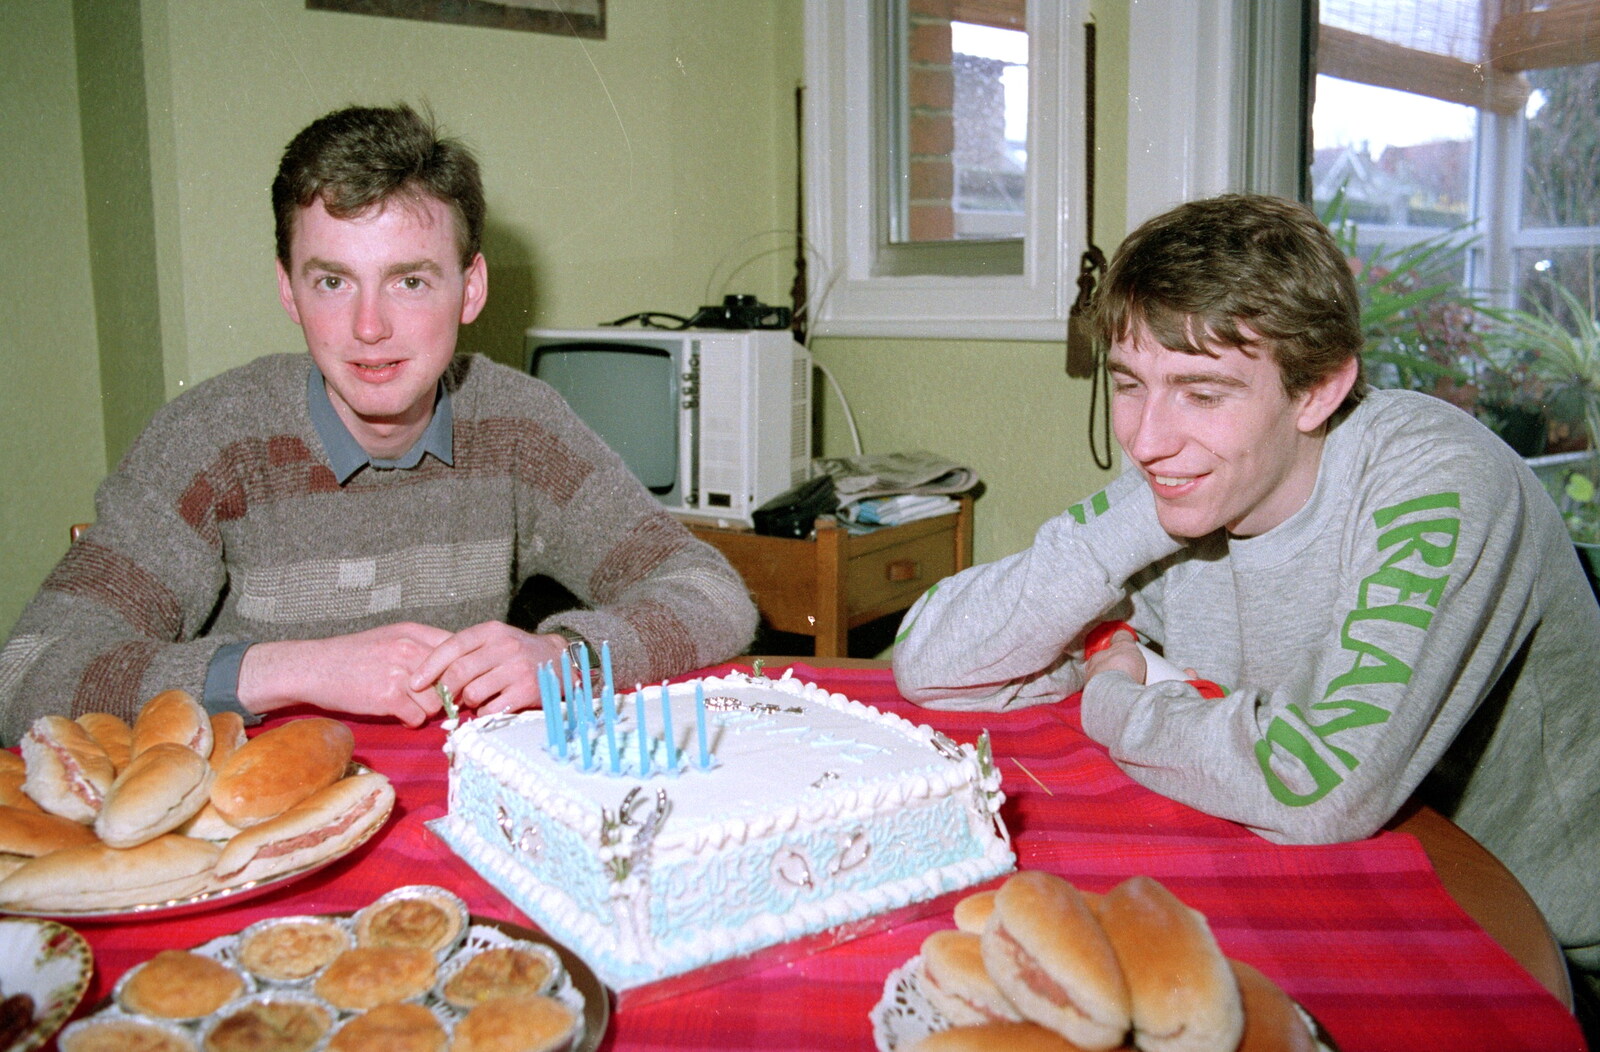 Dave surveys his birthday cake from Trotsky's Birthday, New Malden, Kingston Upon Thames - 20th April 1986